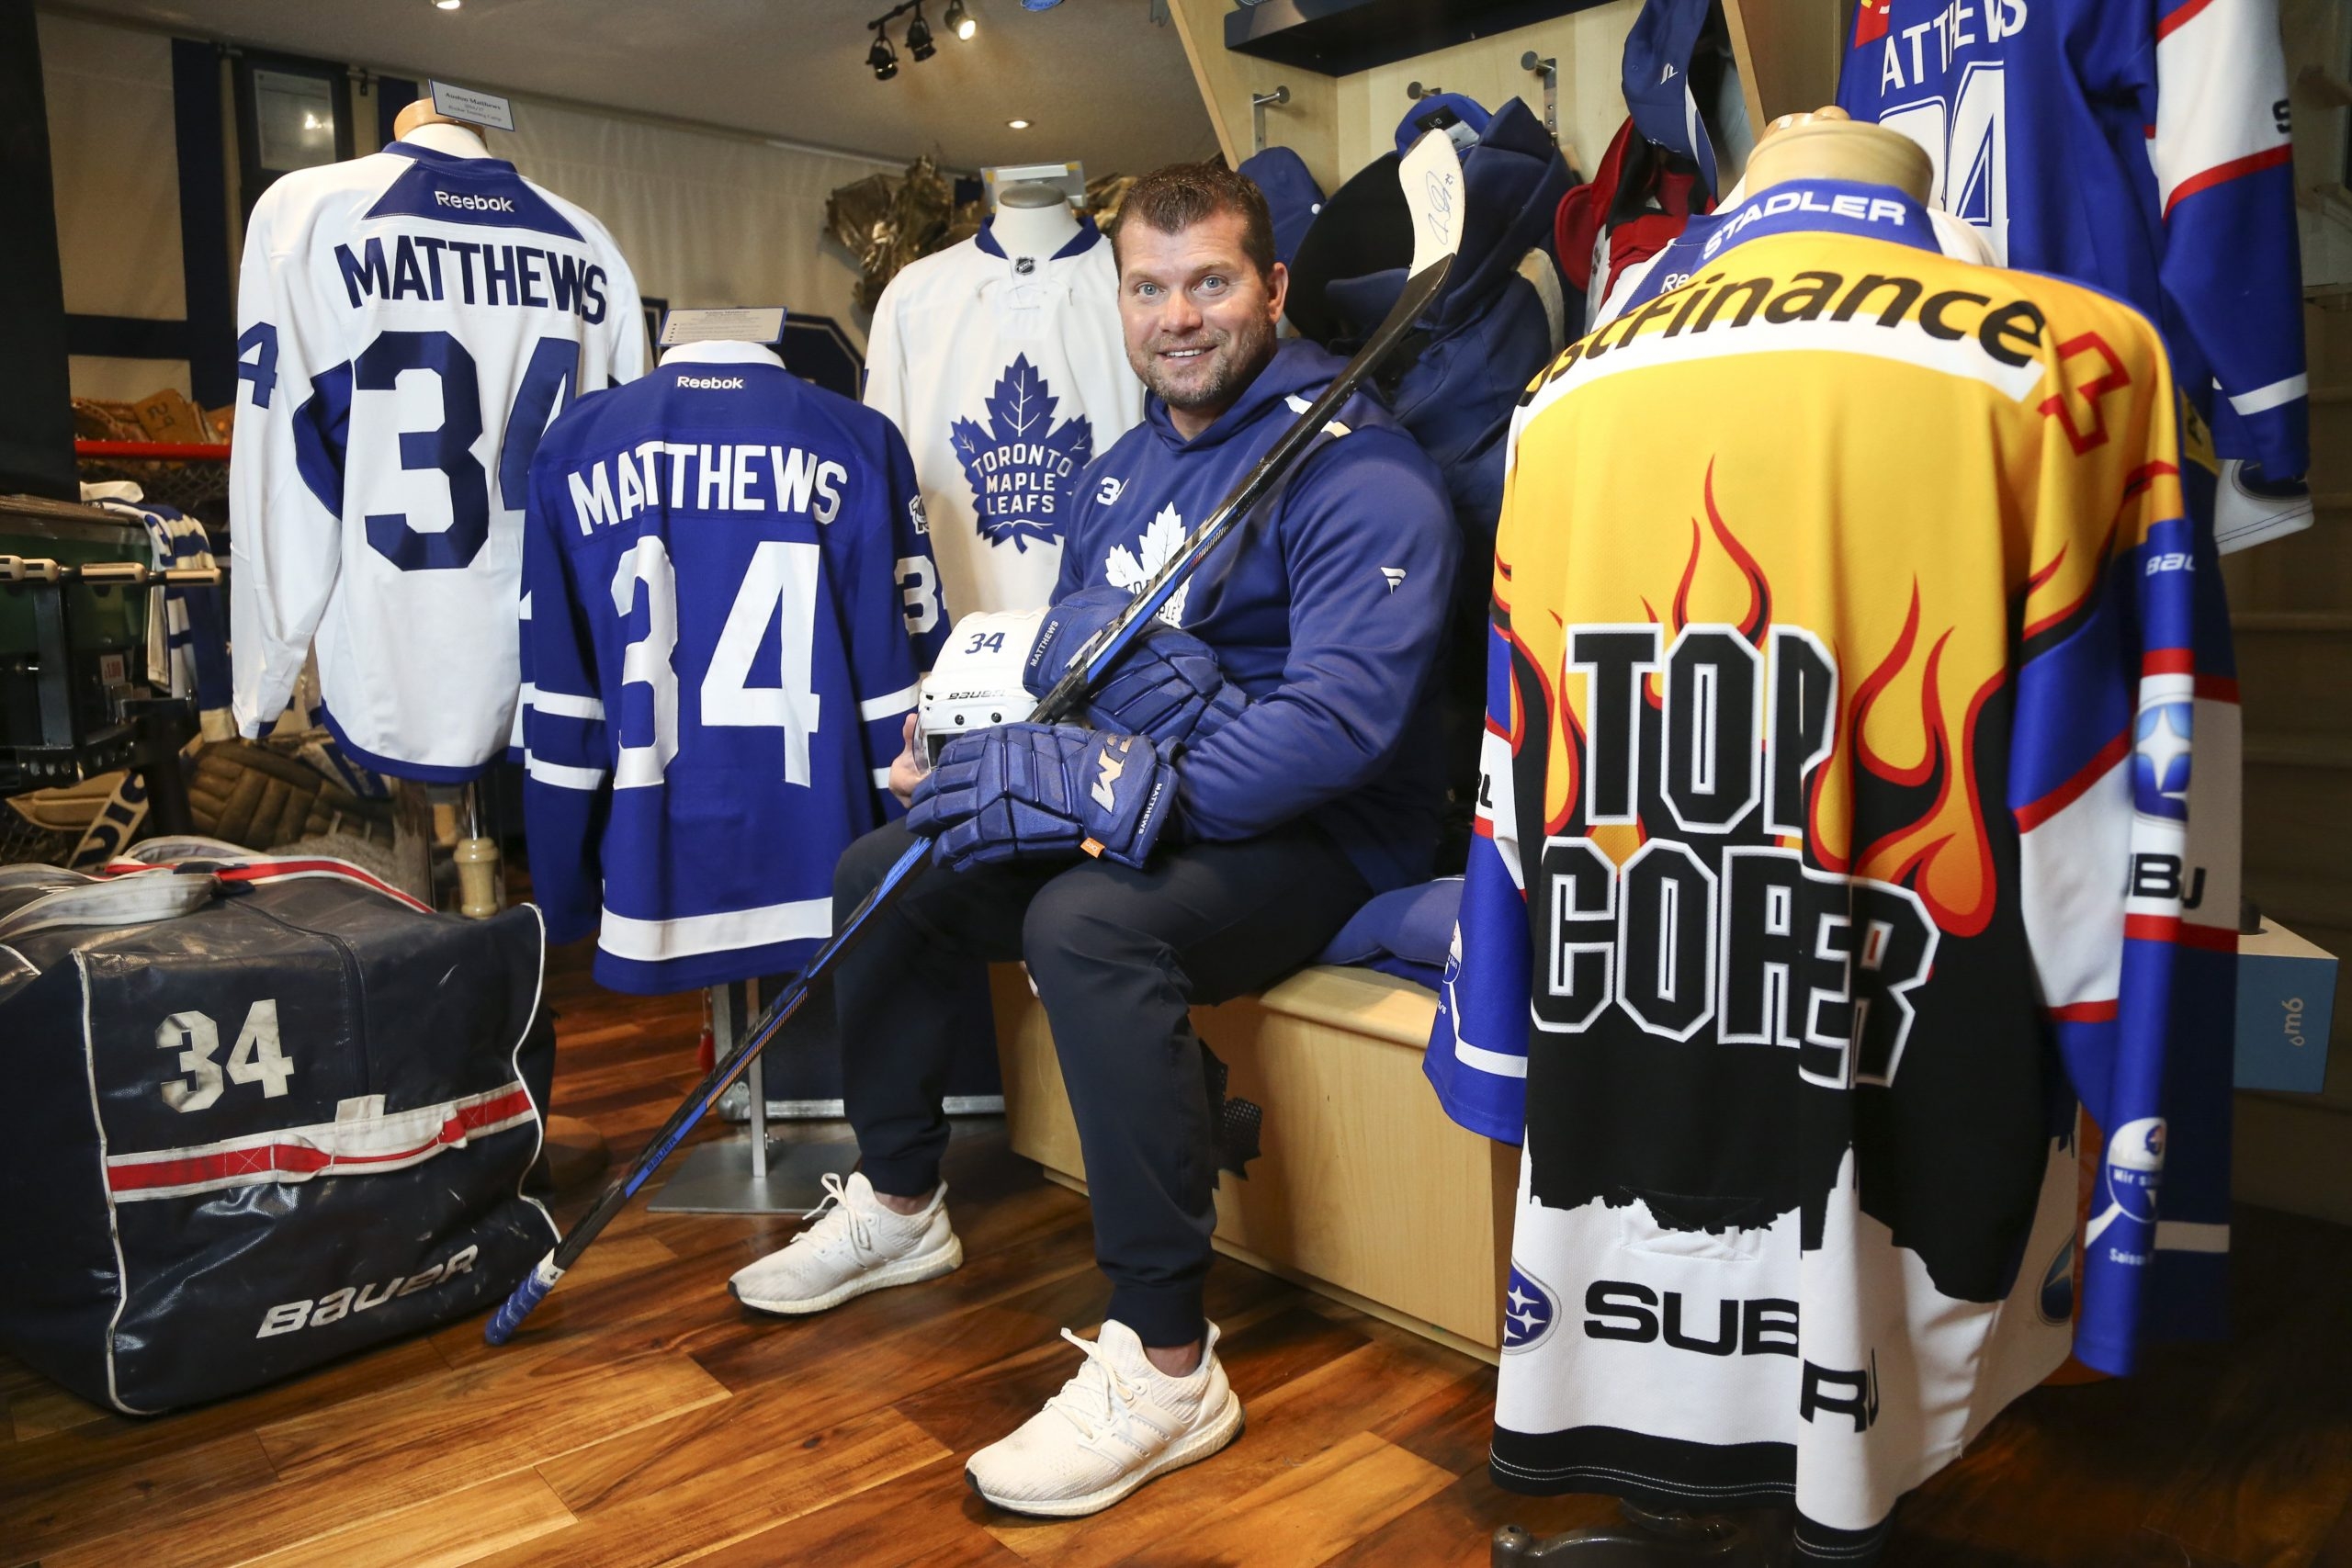 Mats Sundin Autographed Toronto Maple Leafs Pro Jersey - NHL Auctions